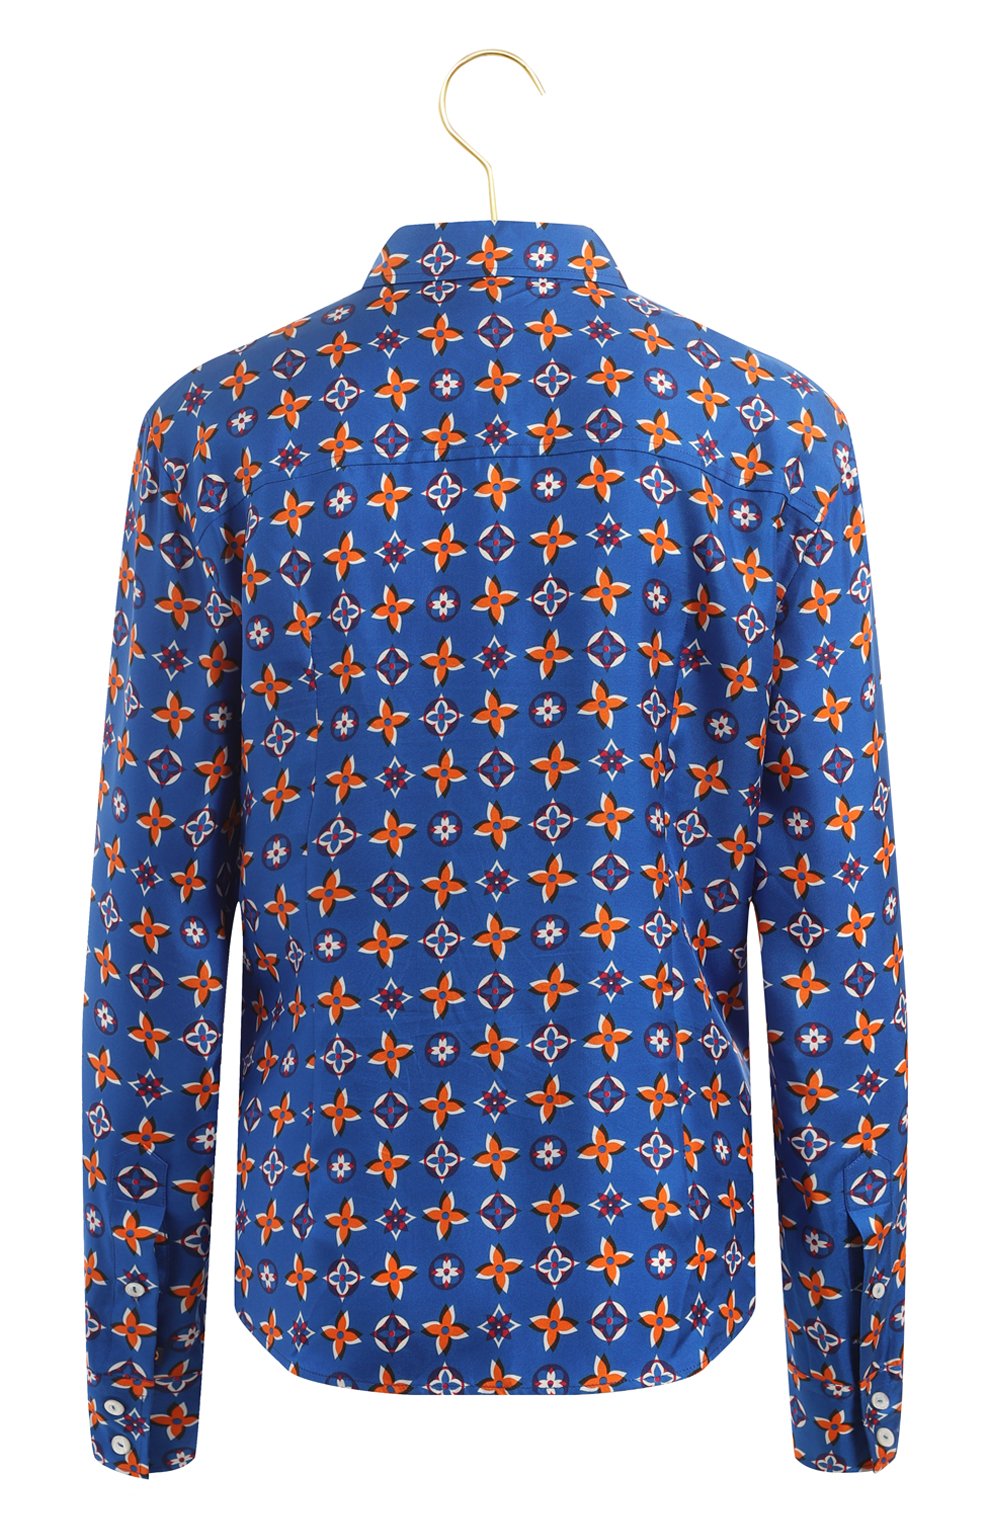 Шелковая блузка | Louis Vuitton | Синий - 2